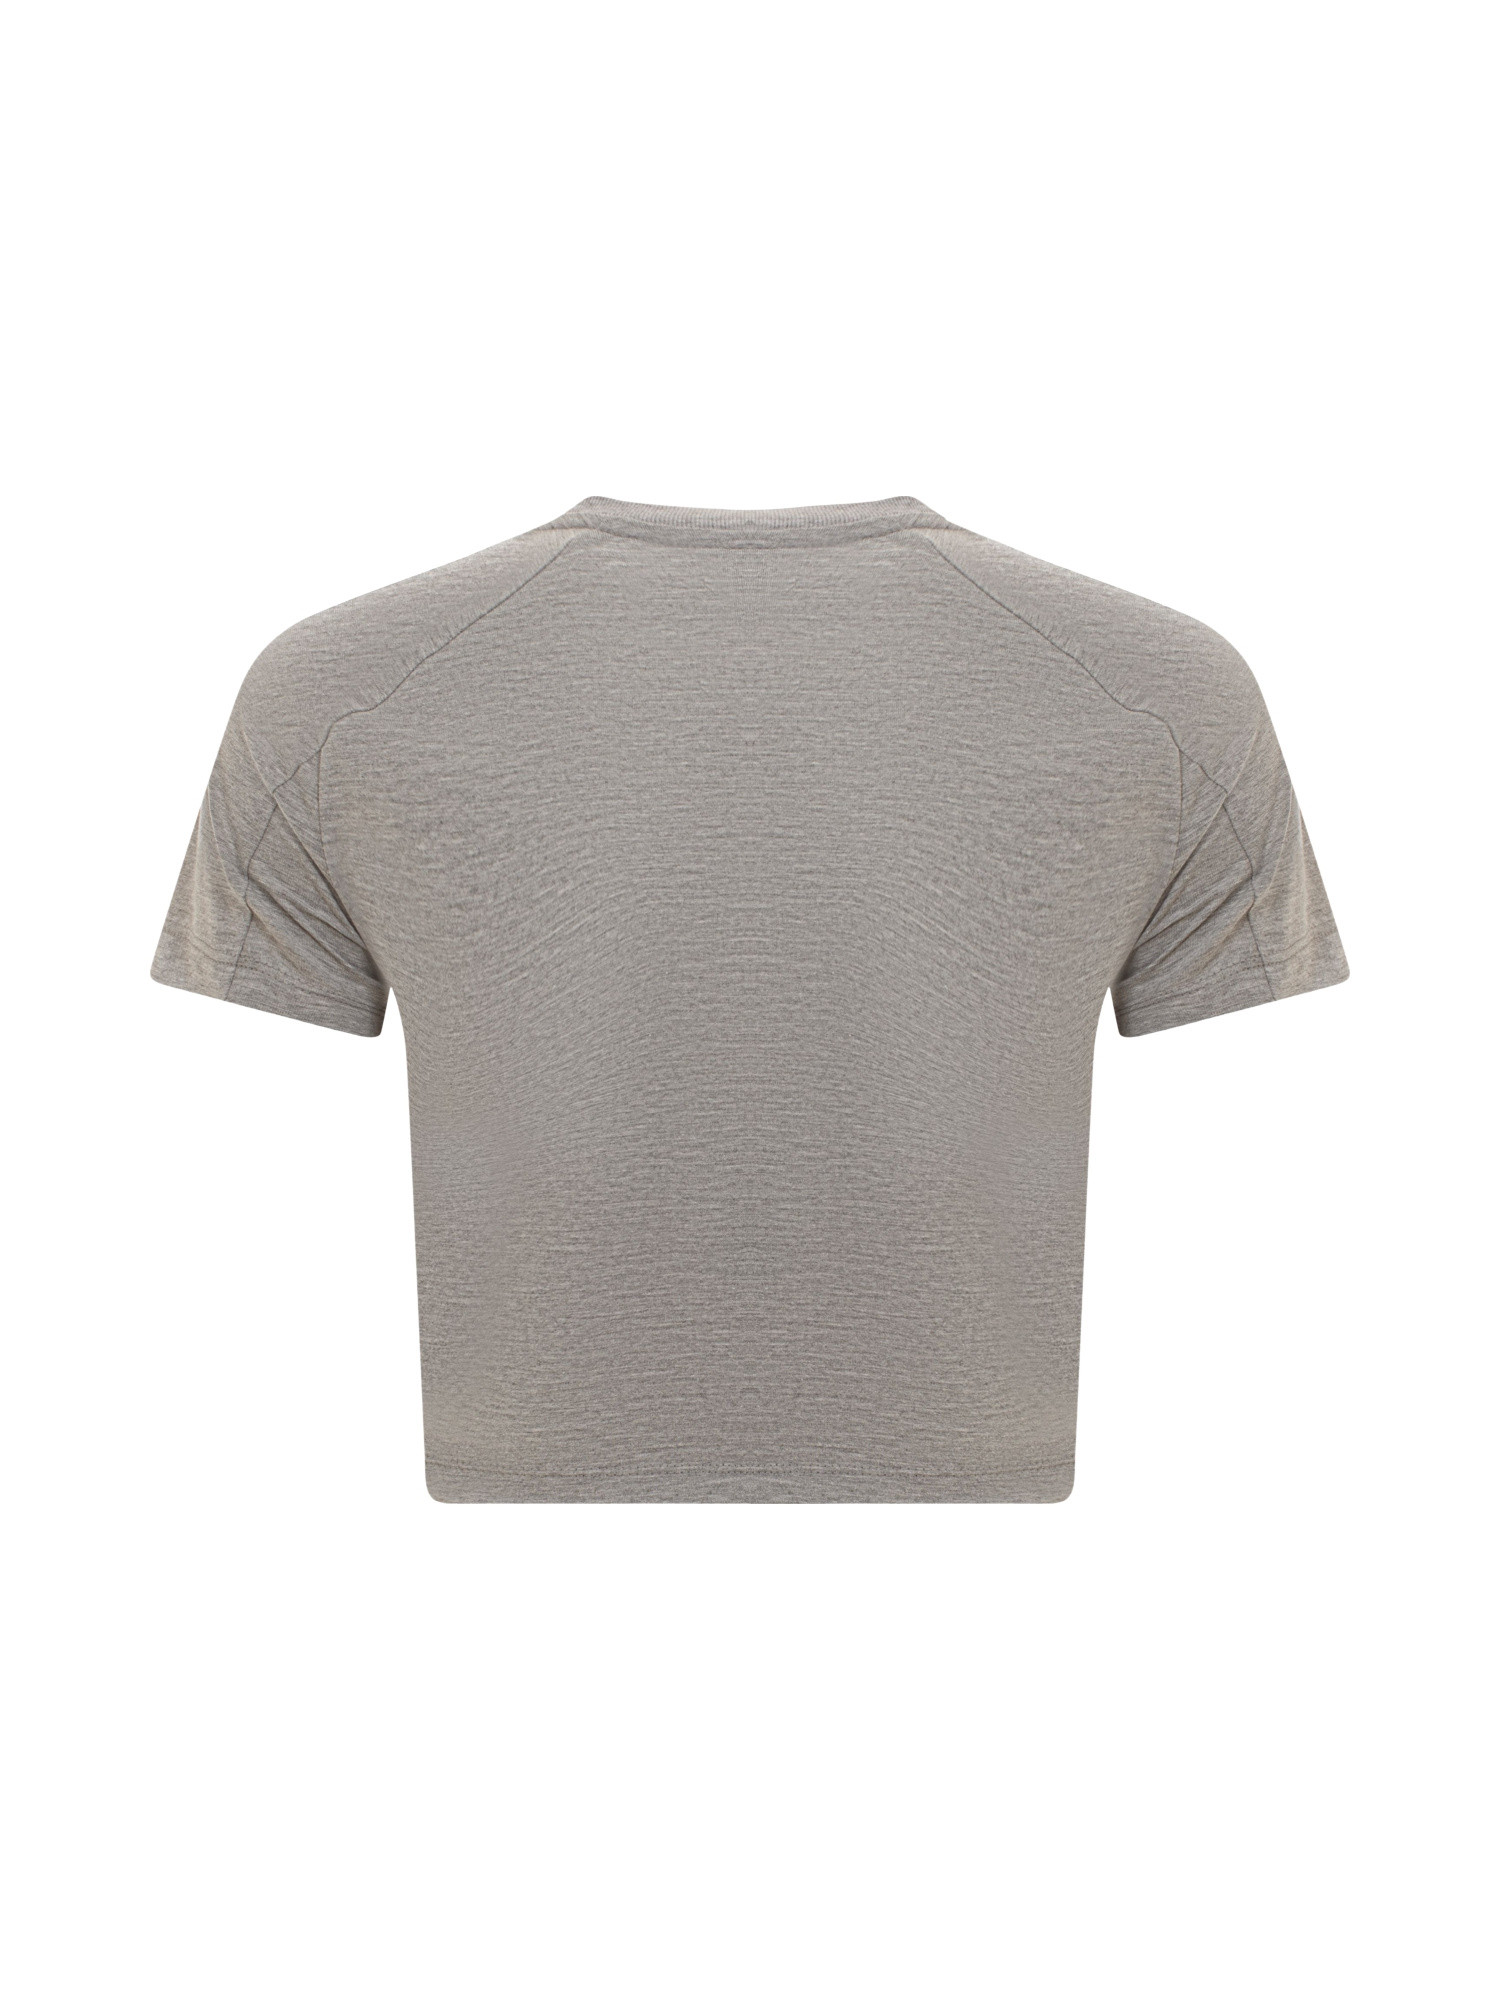 Chiara Ferragni - Cropped T-shirt with logo, Grey, large image number 1